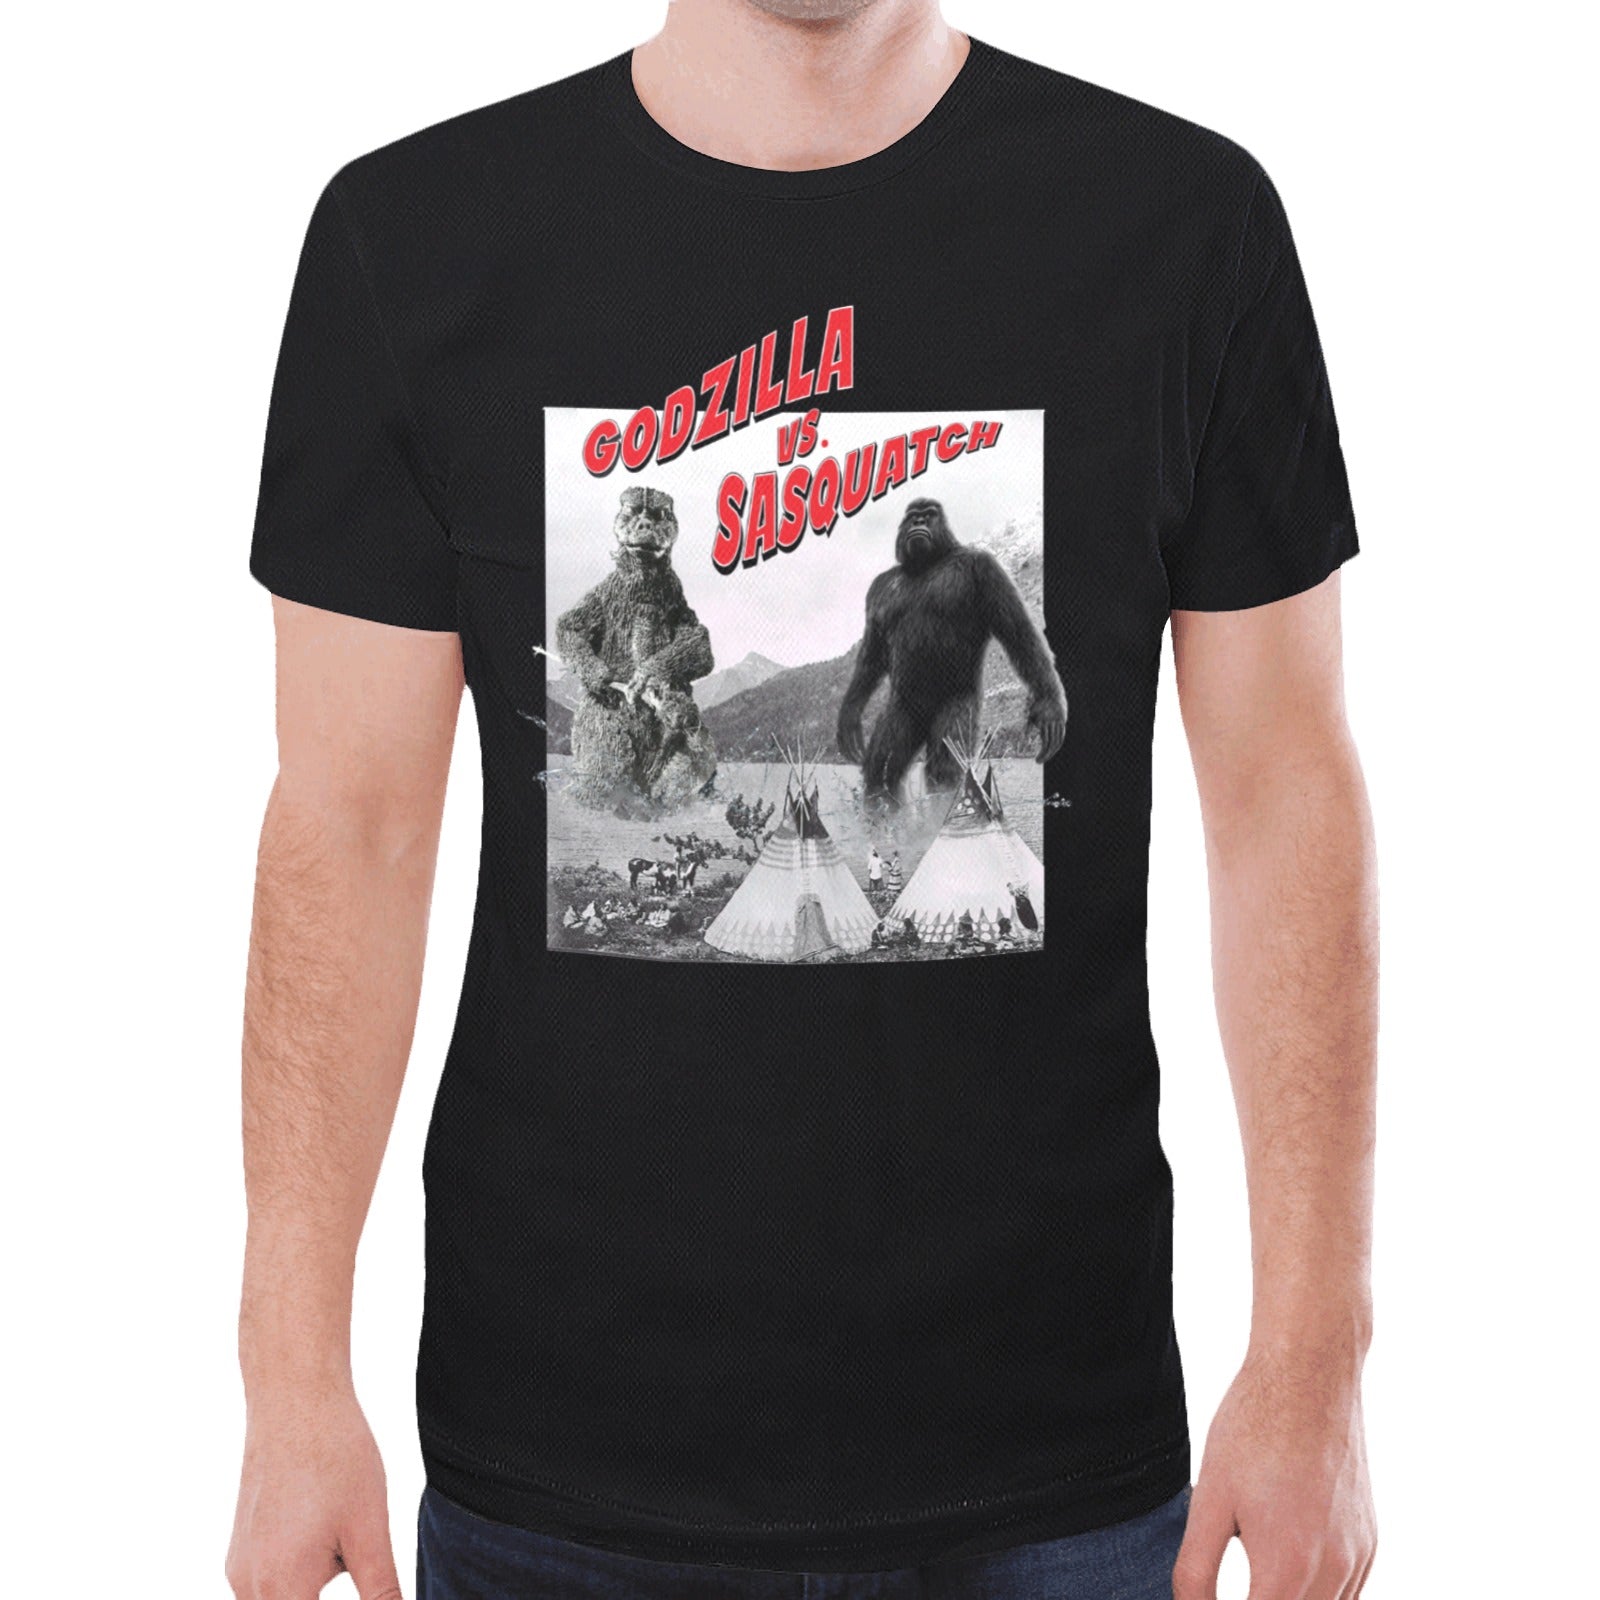 Godzilla vs Sasquatch Unisex T-shirt